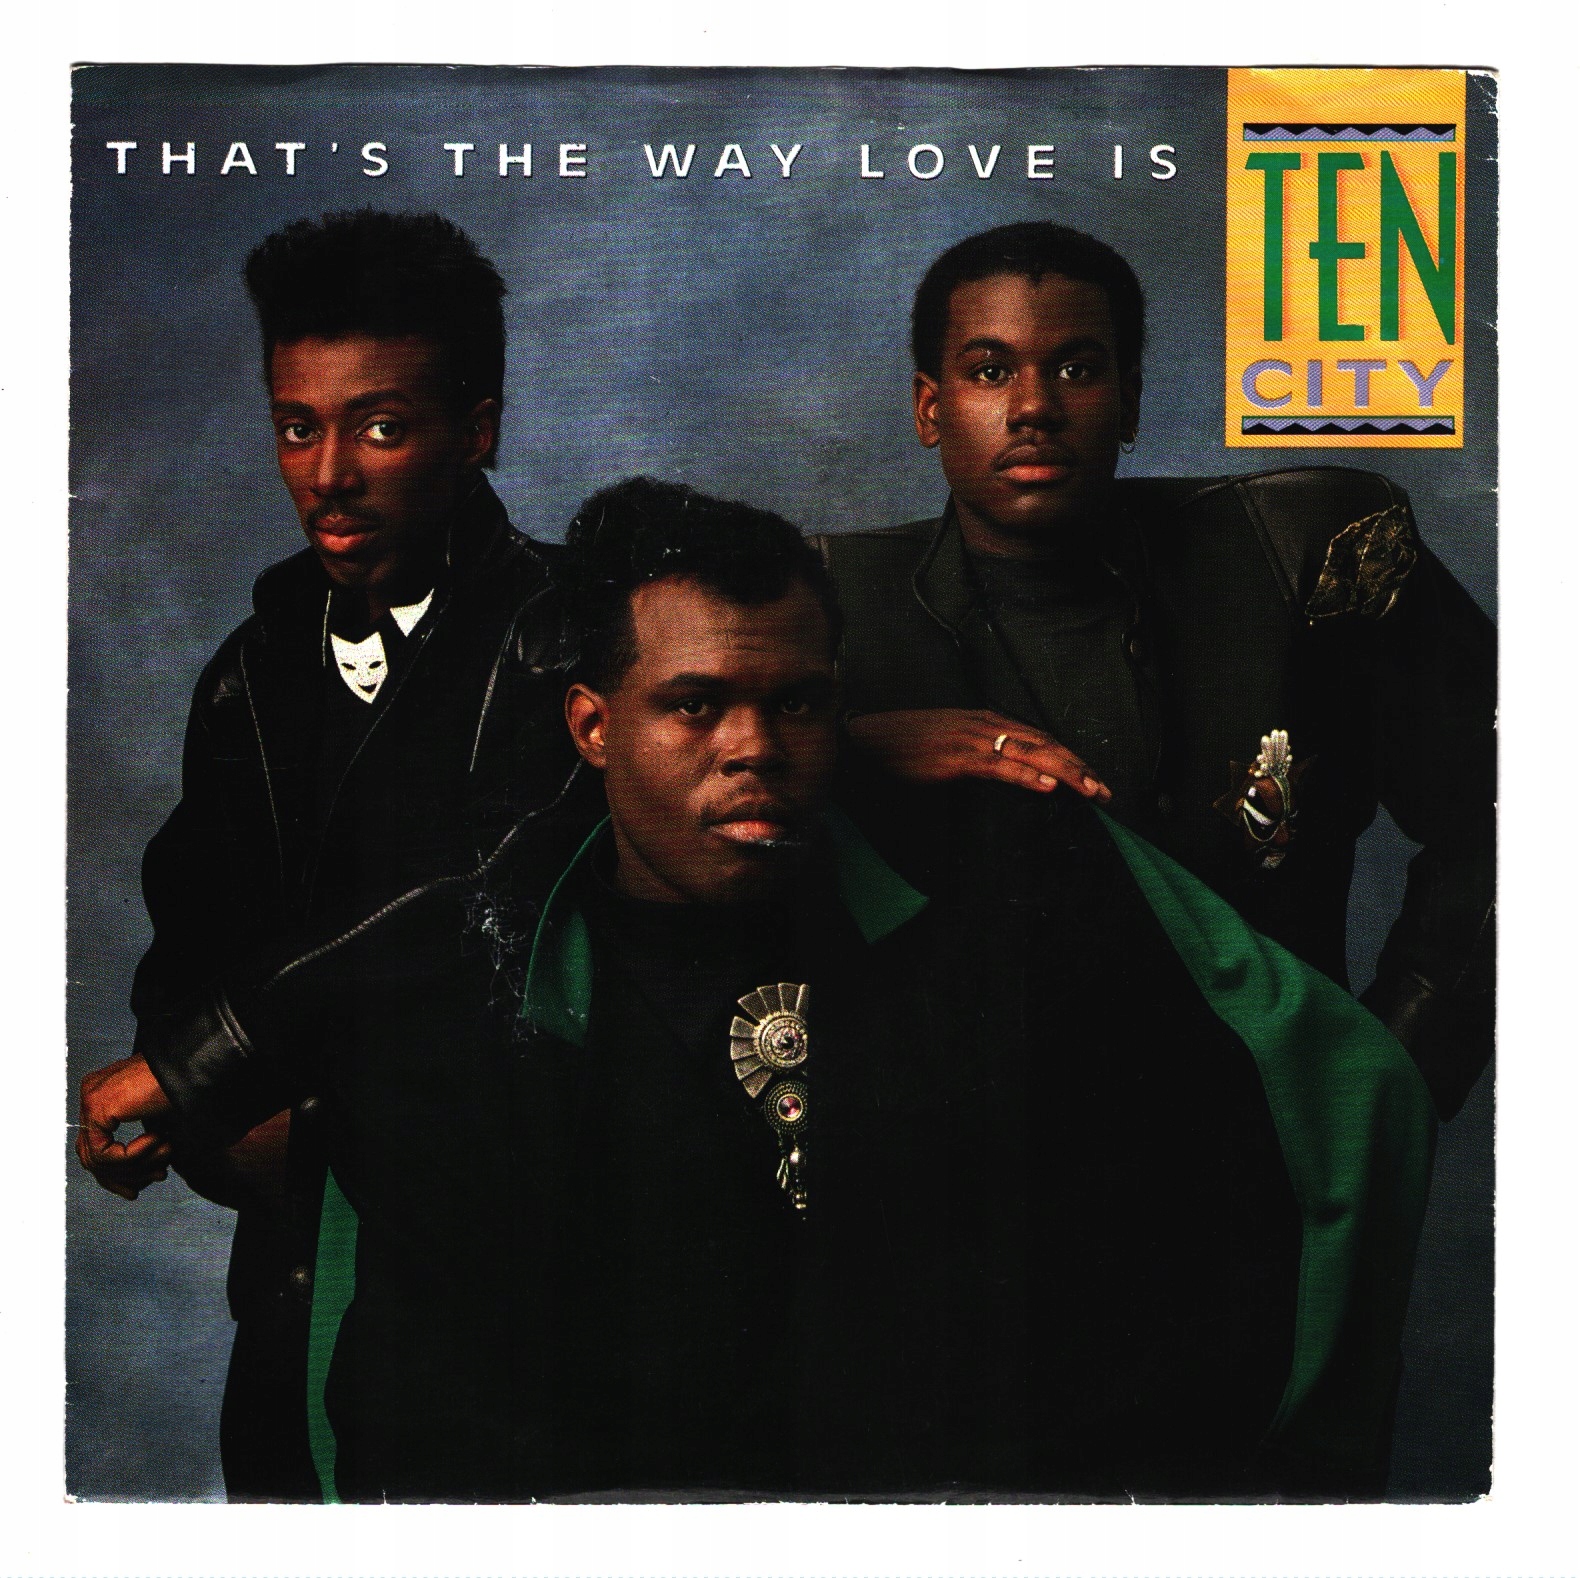 Way s of love. Ten City - that's the way Love is (Tall Paul Remix). Love way. C-ya - Love is the way (Vinyl) (1997).